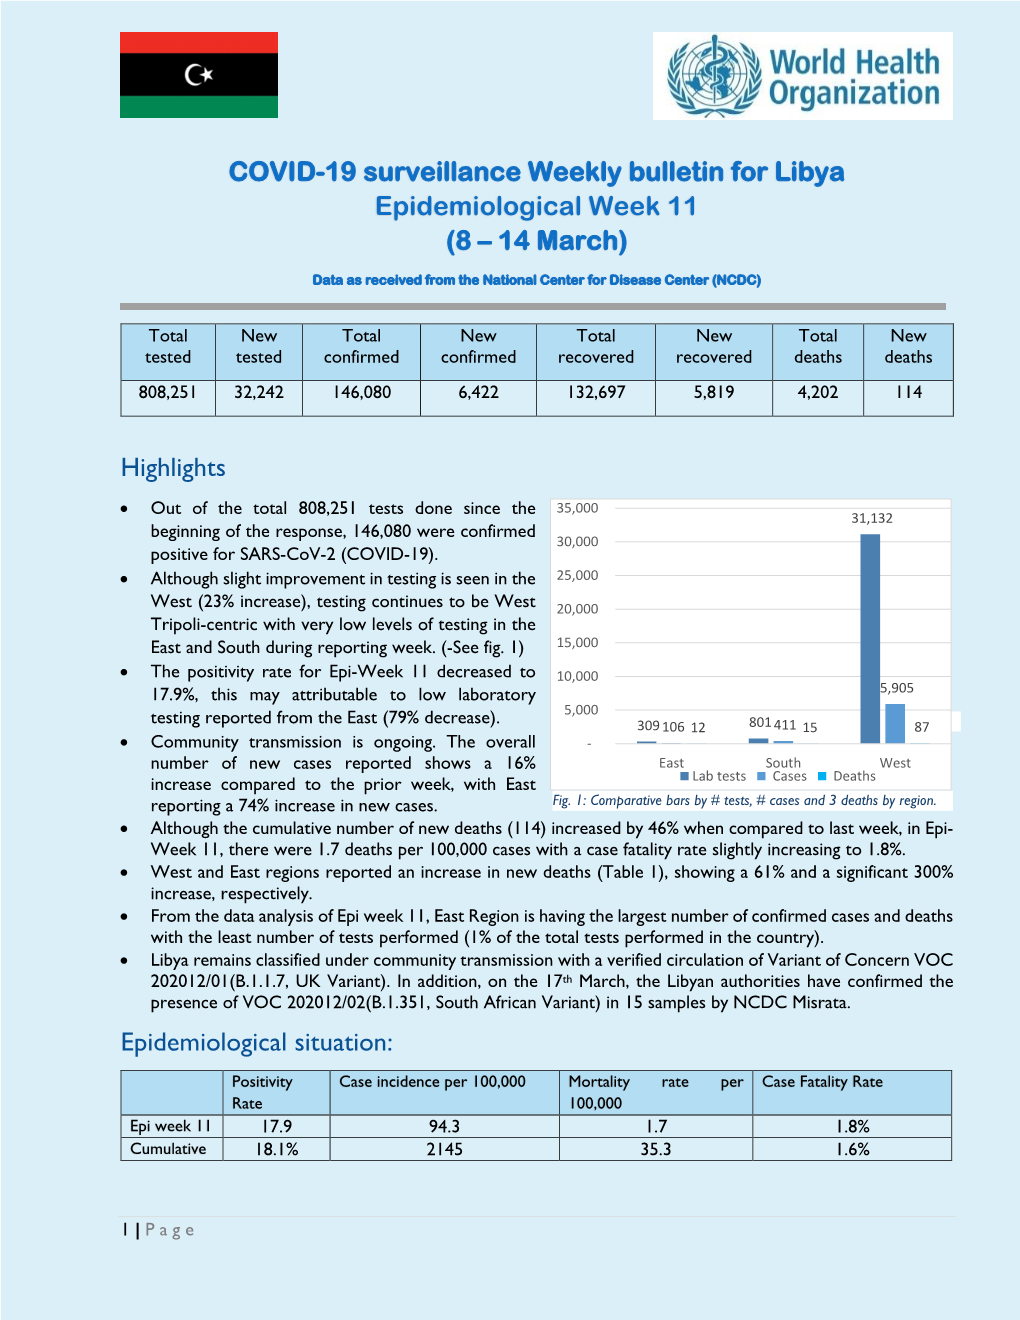 COVID-19 Surveillance Weekly Bulletin for Libya Epidemiological Week 11 (8 – 14 March)